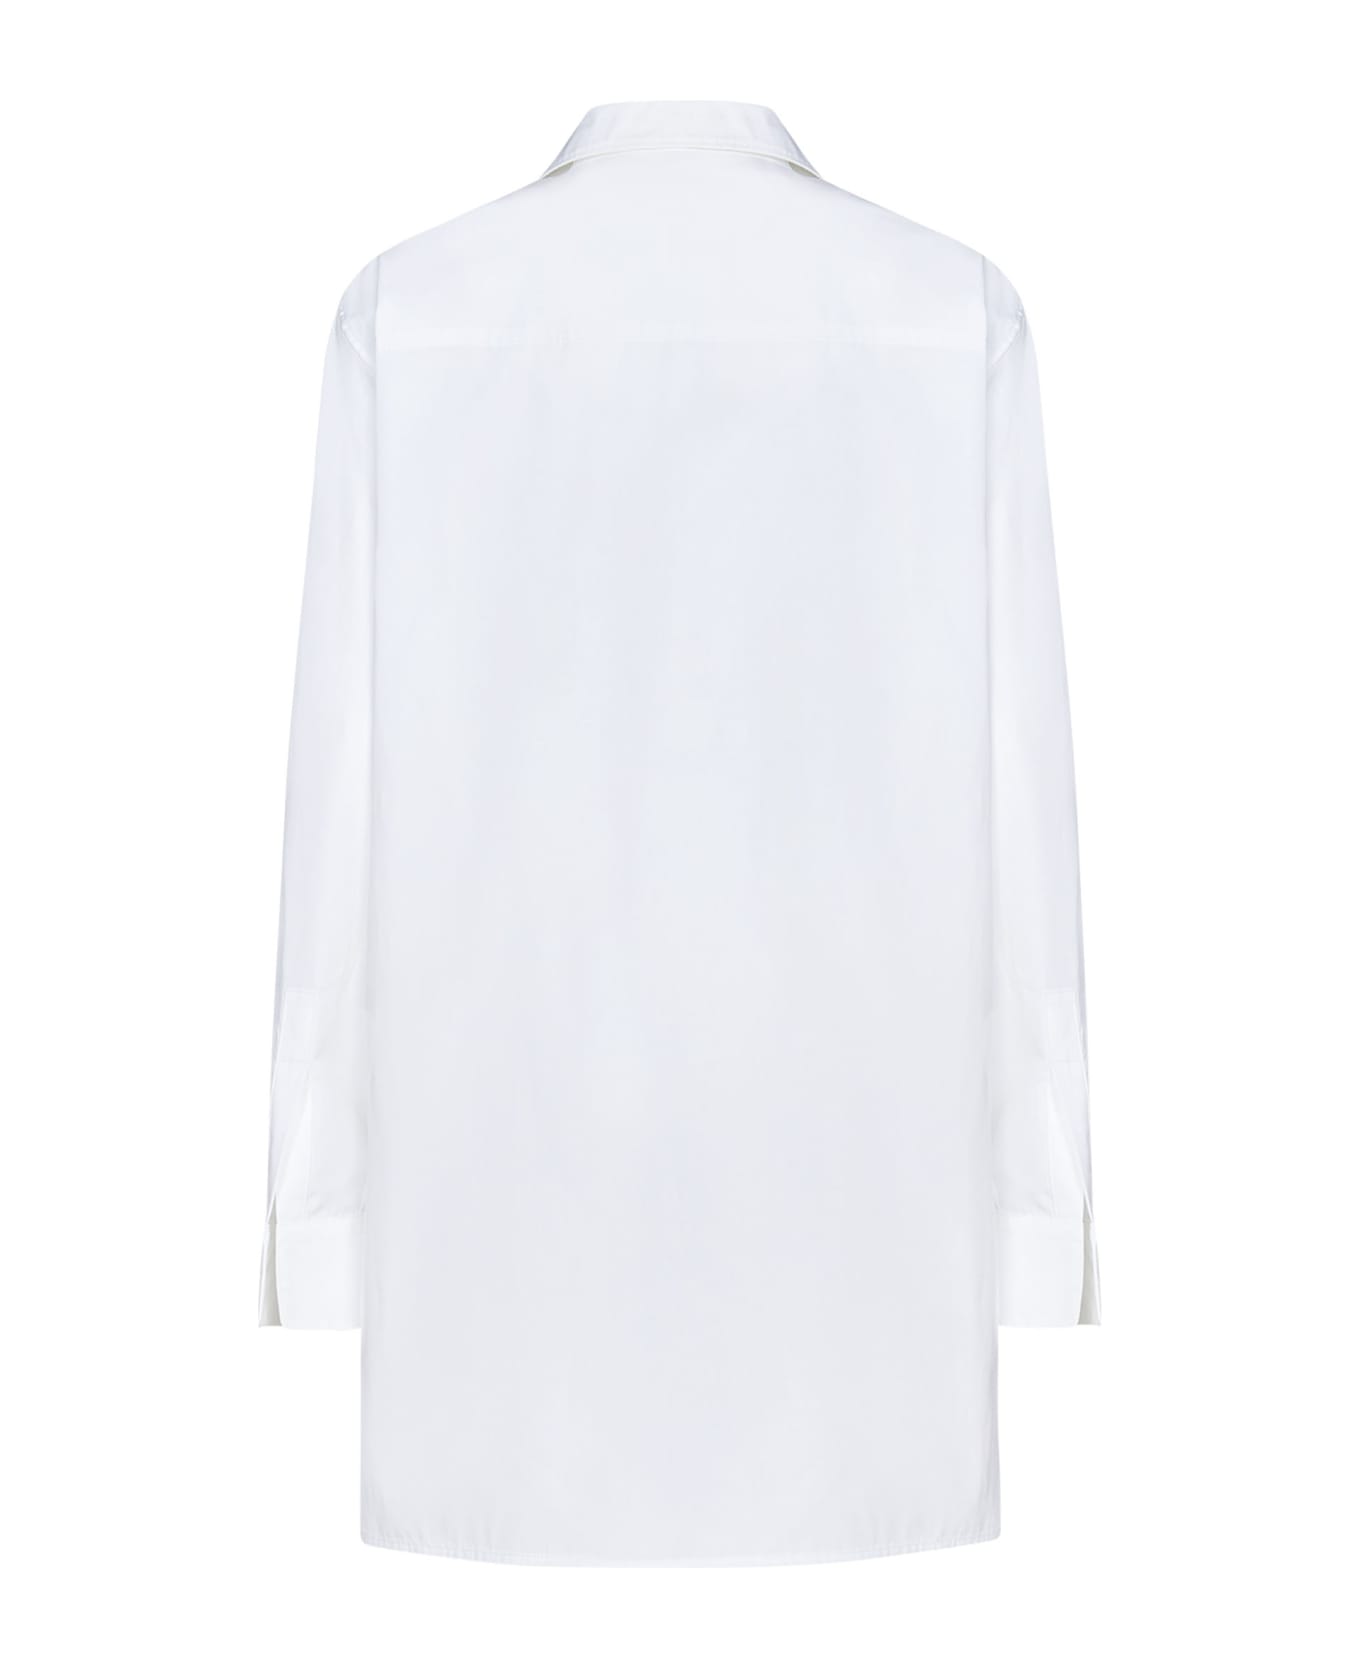 Off-White Poplin Flower Button Shirt - White シャツ